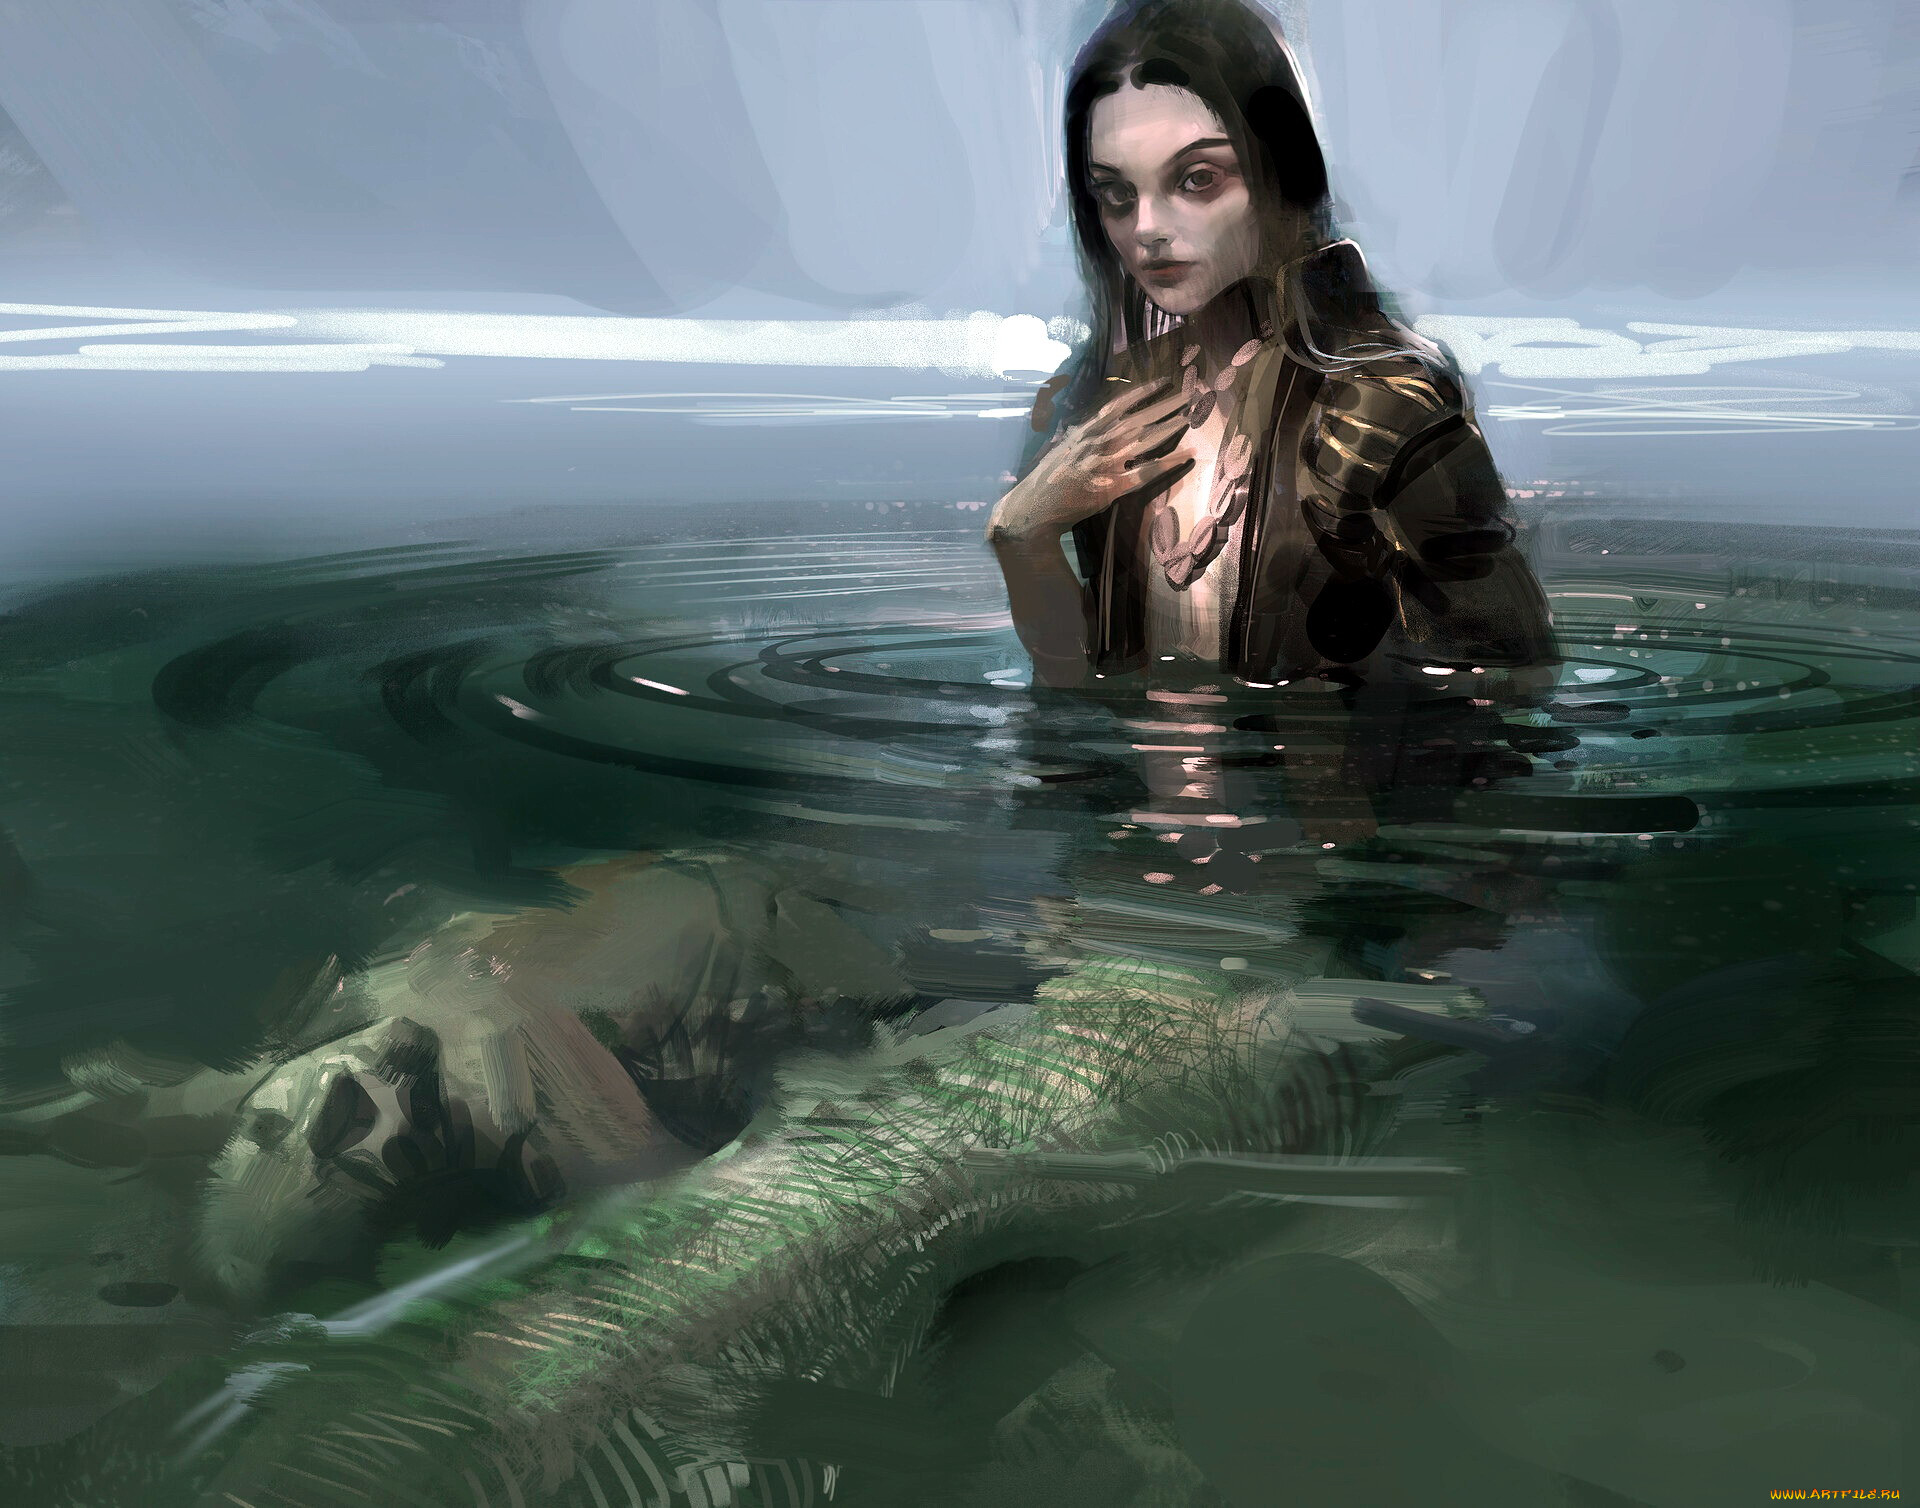 General 1920x1508 fantasy art fantasy girl mermaids creature in water corpse looking at viewer dark hair water ripples digital art